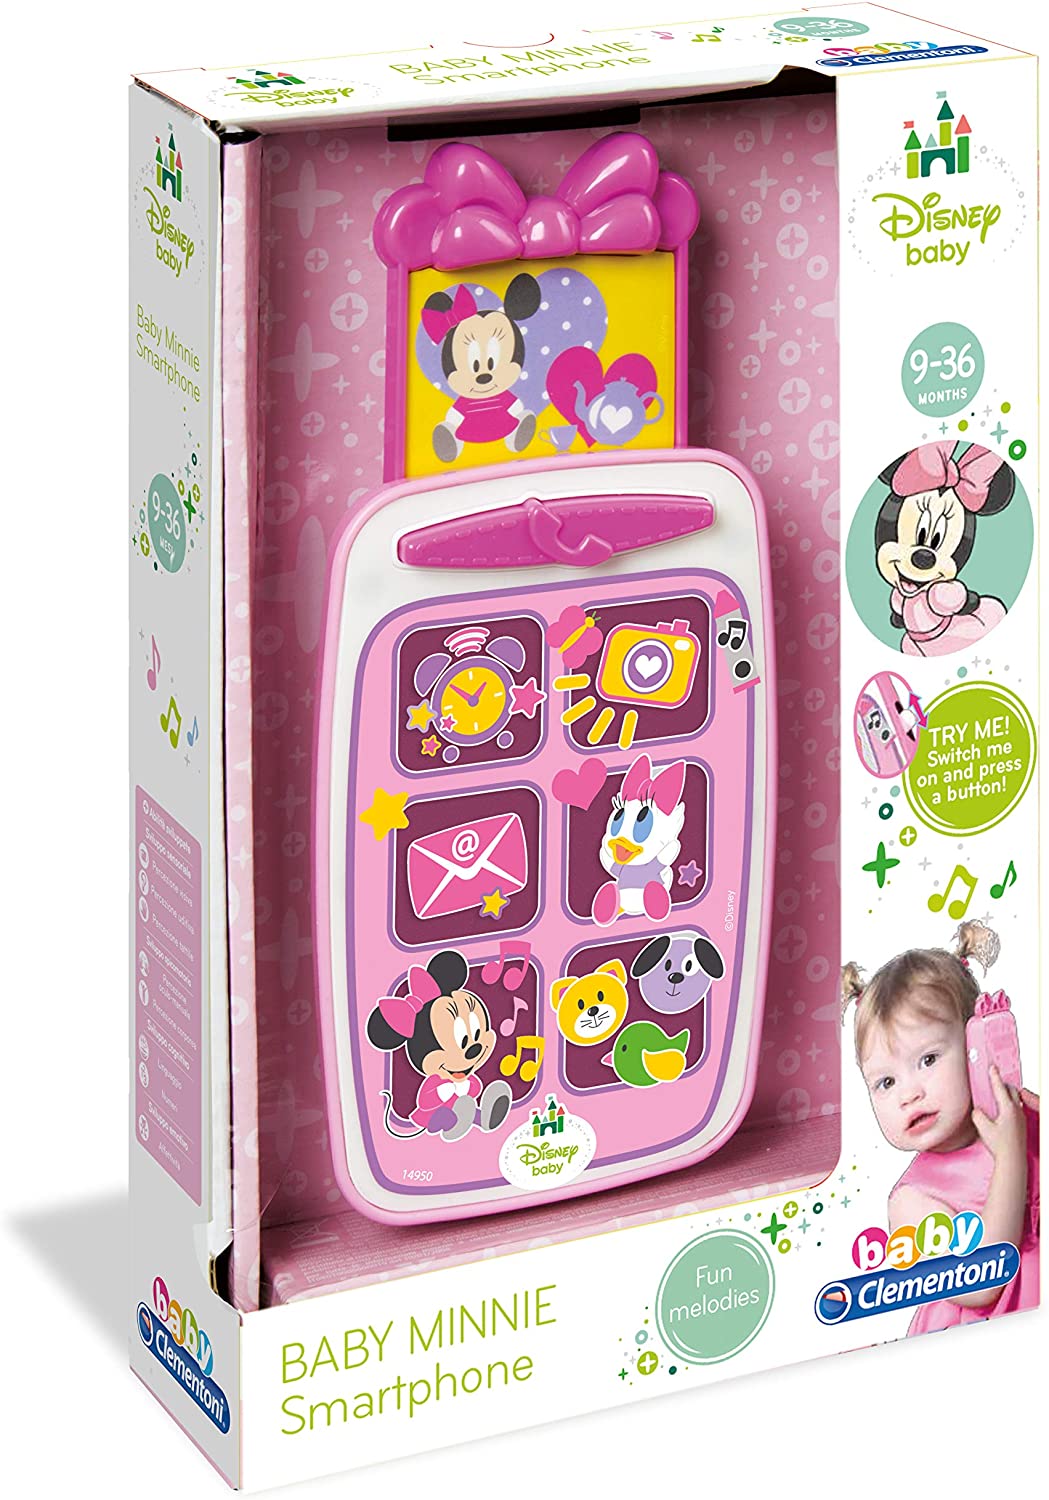 Disney Baby Clem Minnie Smartphone 14950